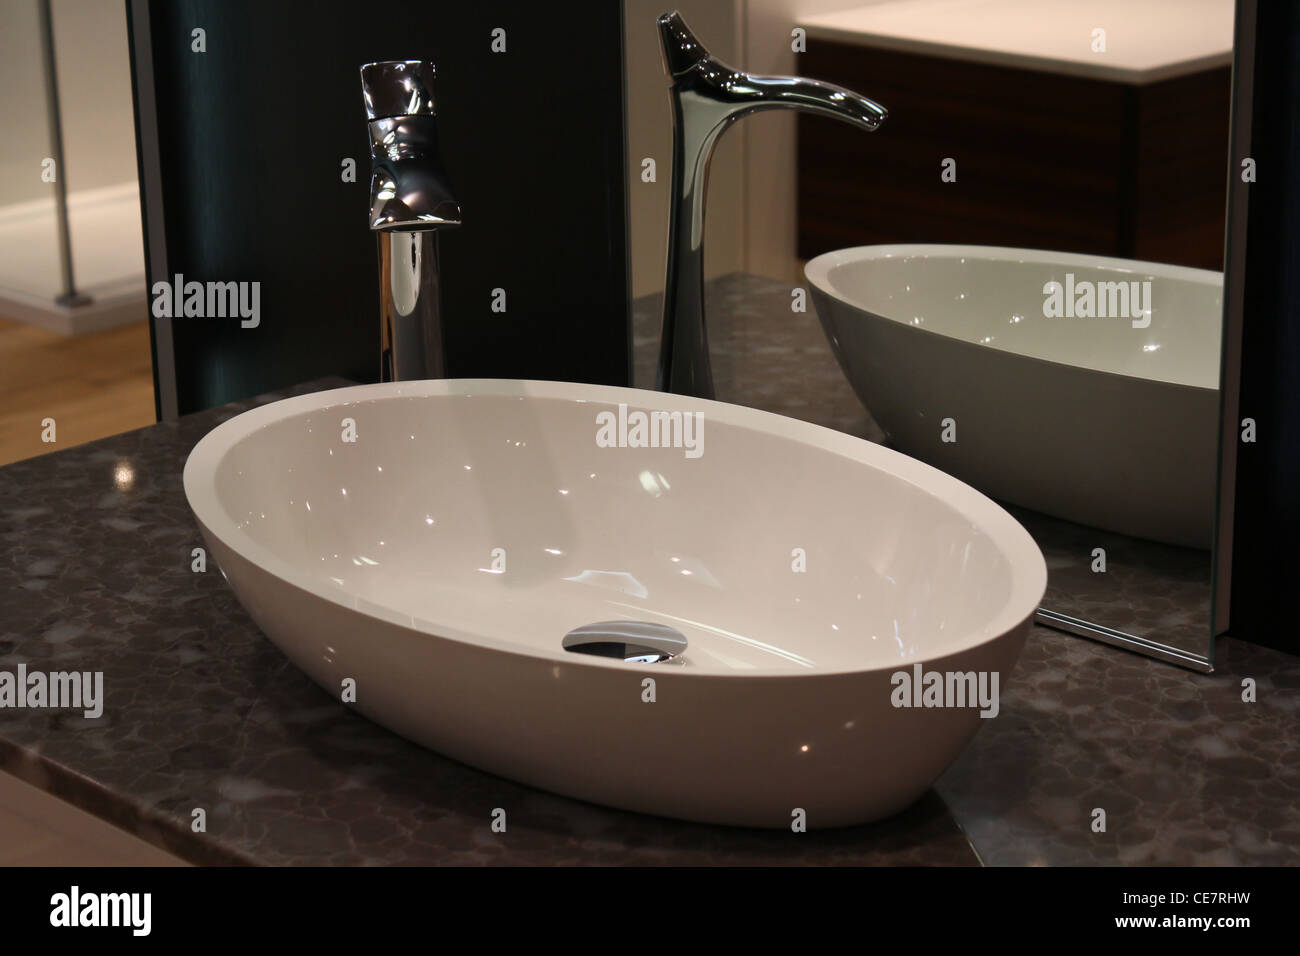 stainless steel facet luxury sink bathroom mirror Stock Photo